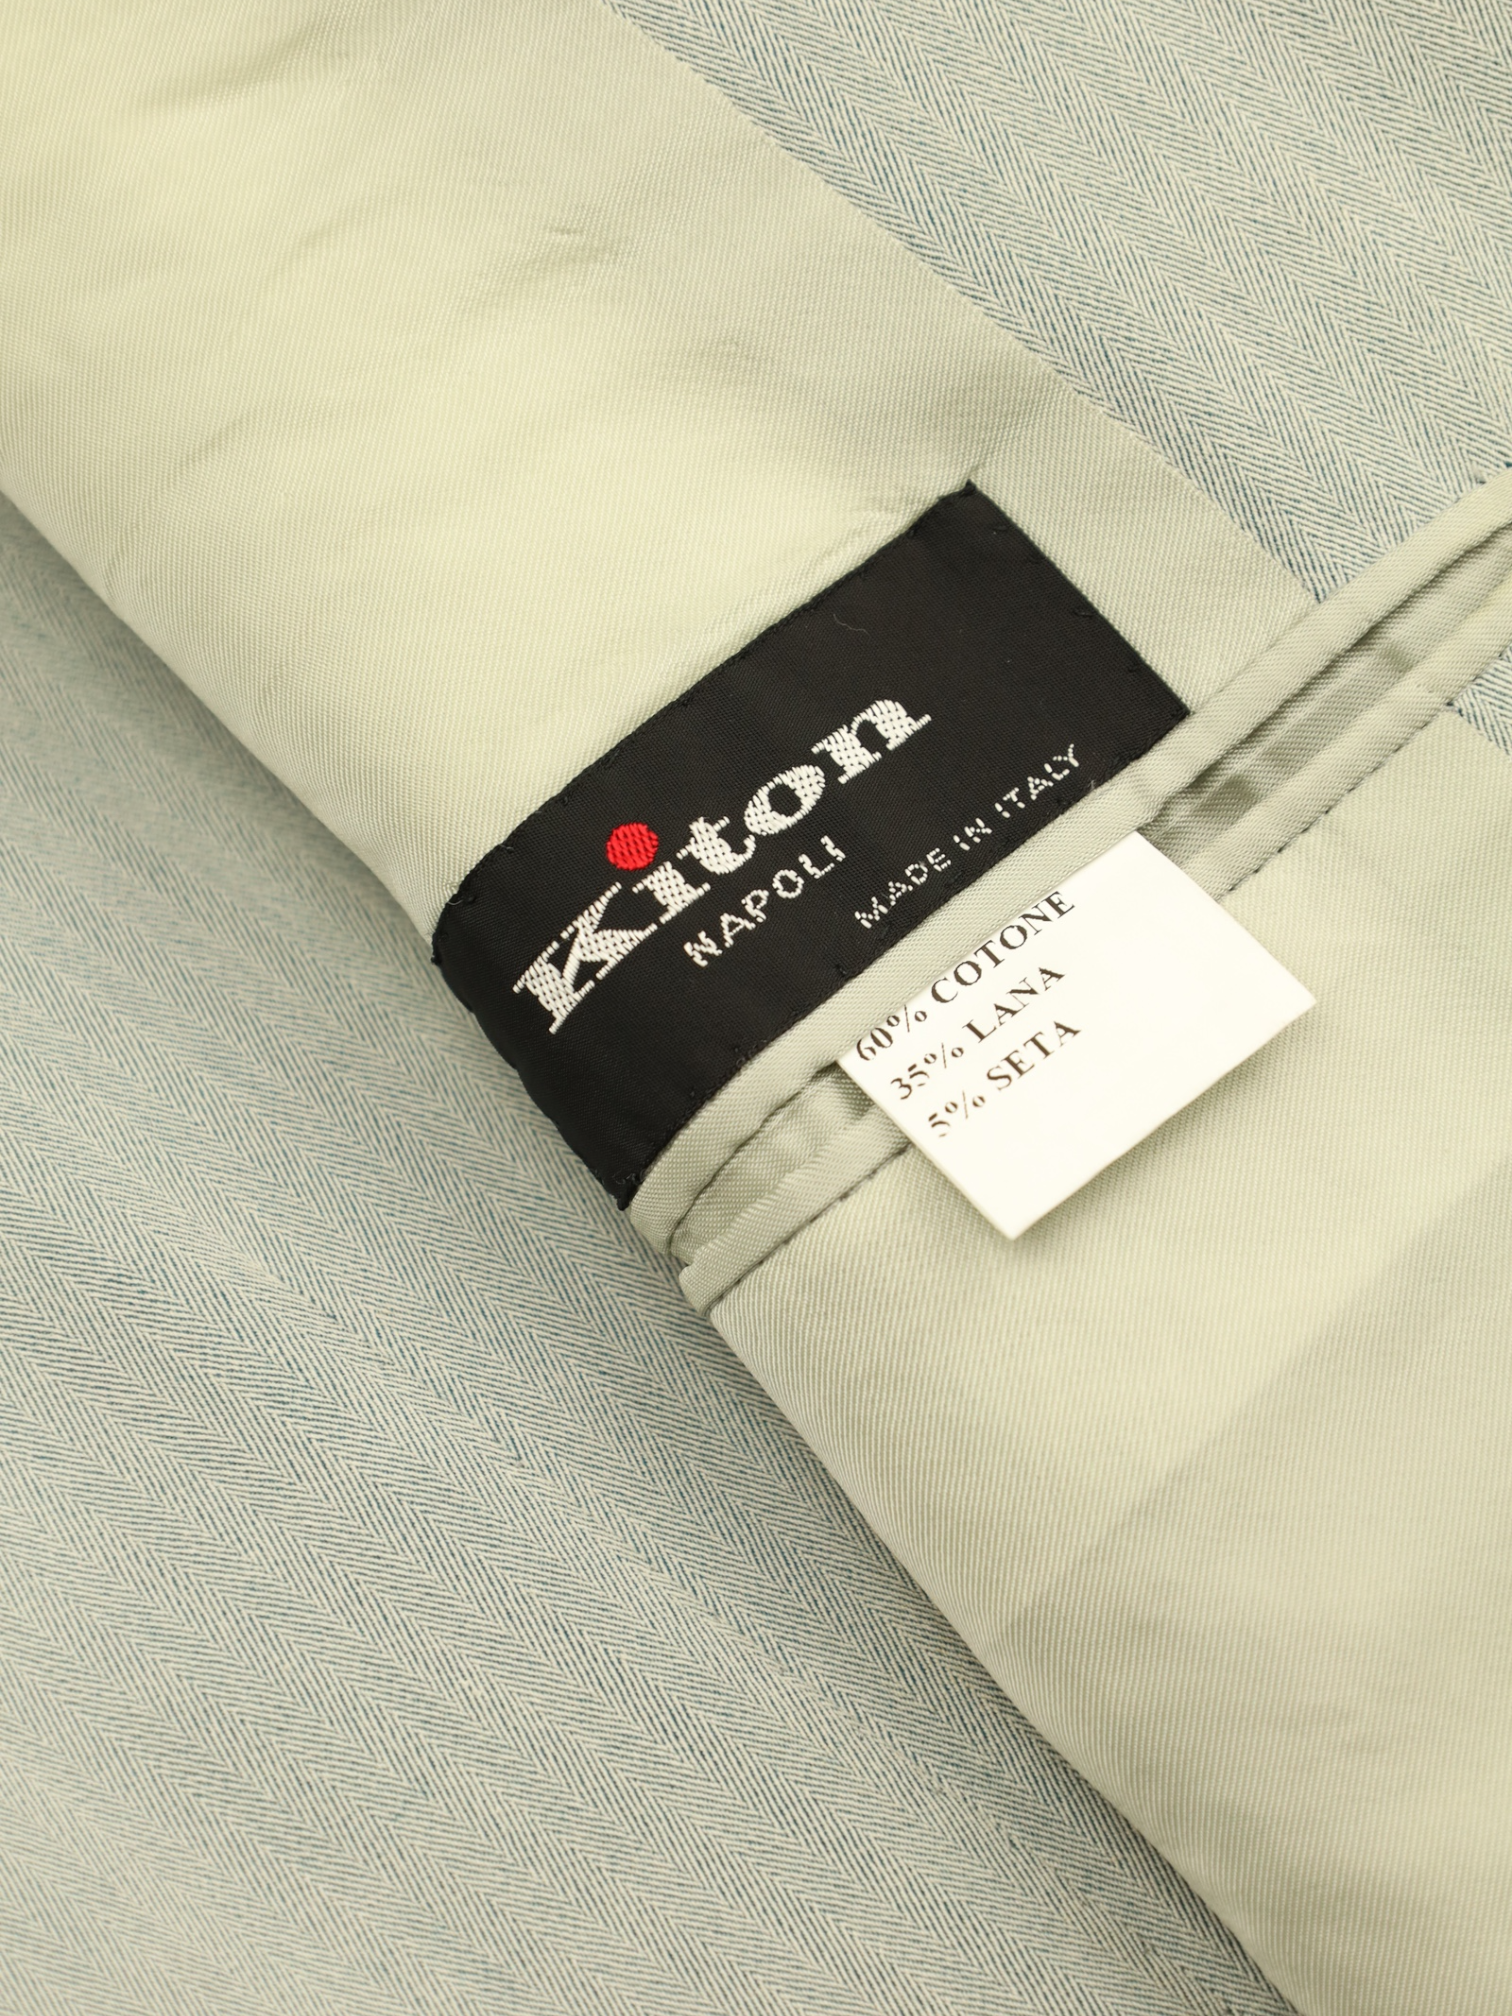 Kiton Sage Green Cotton Blend Solaro Suit